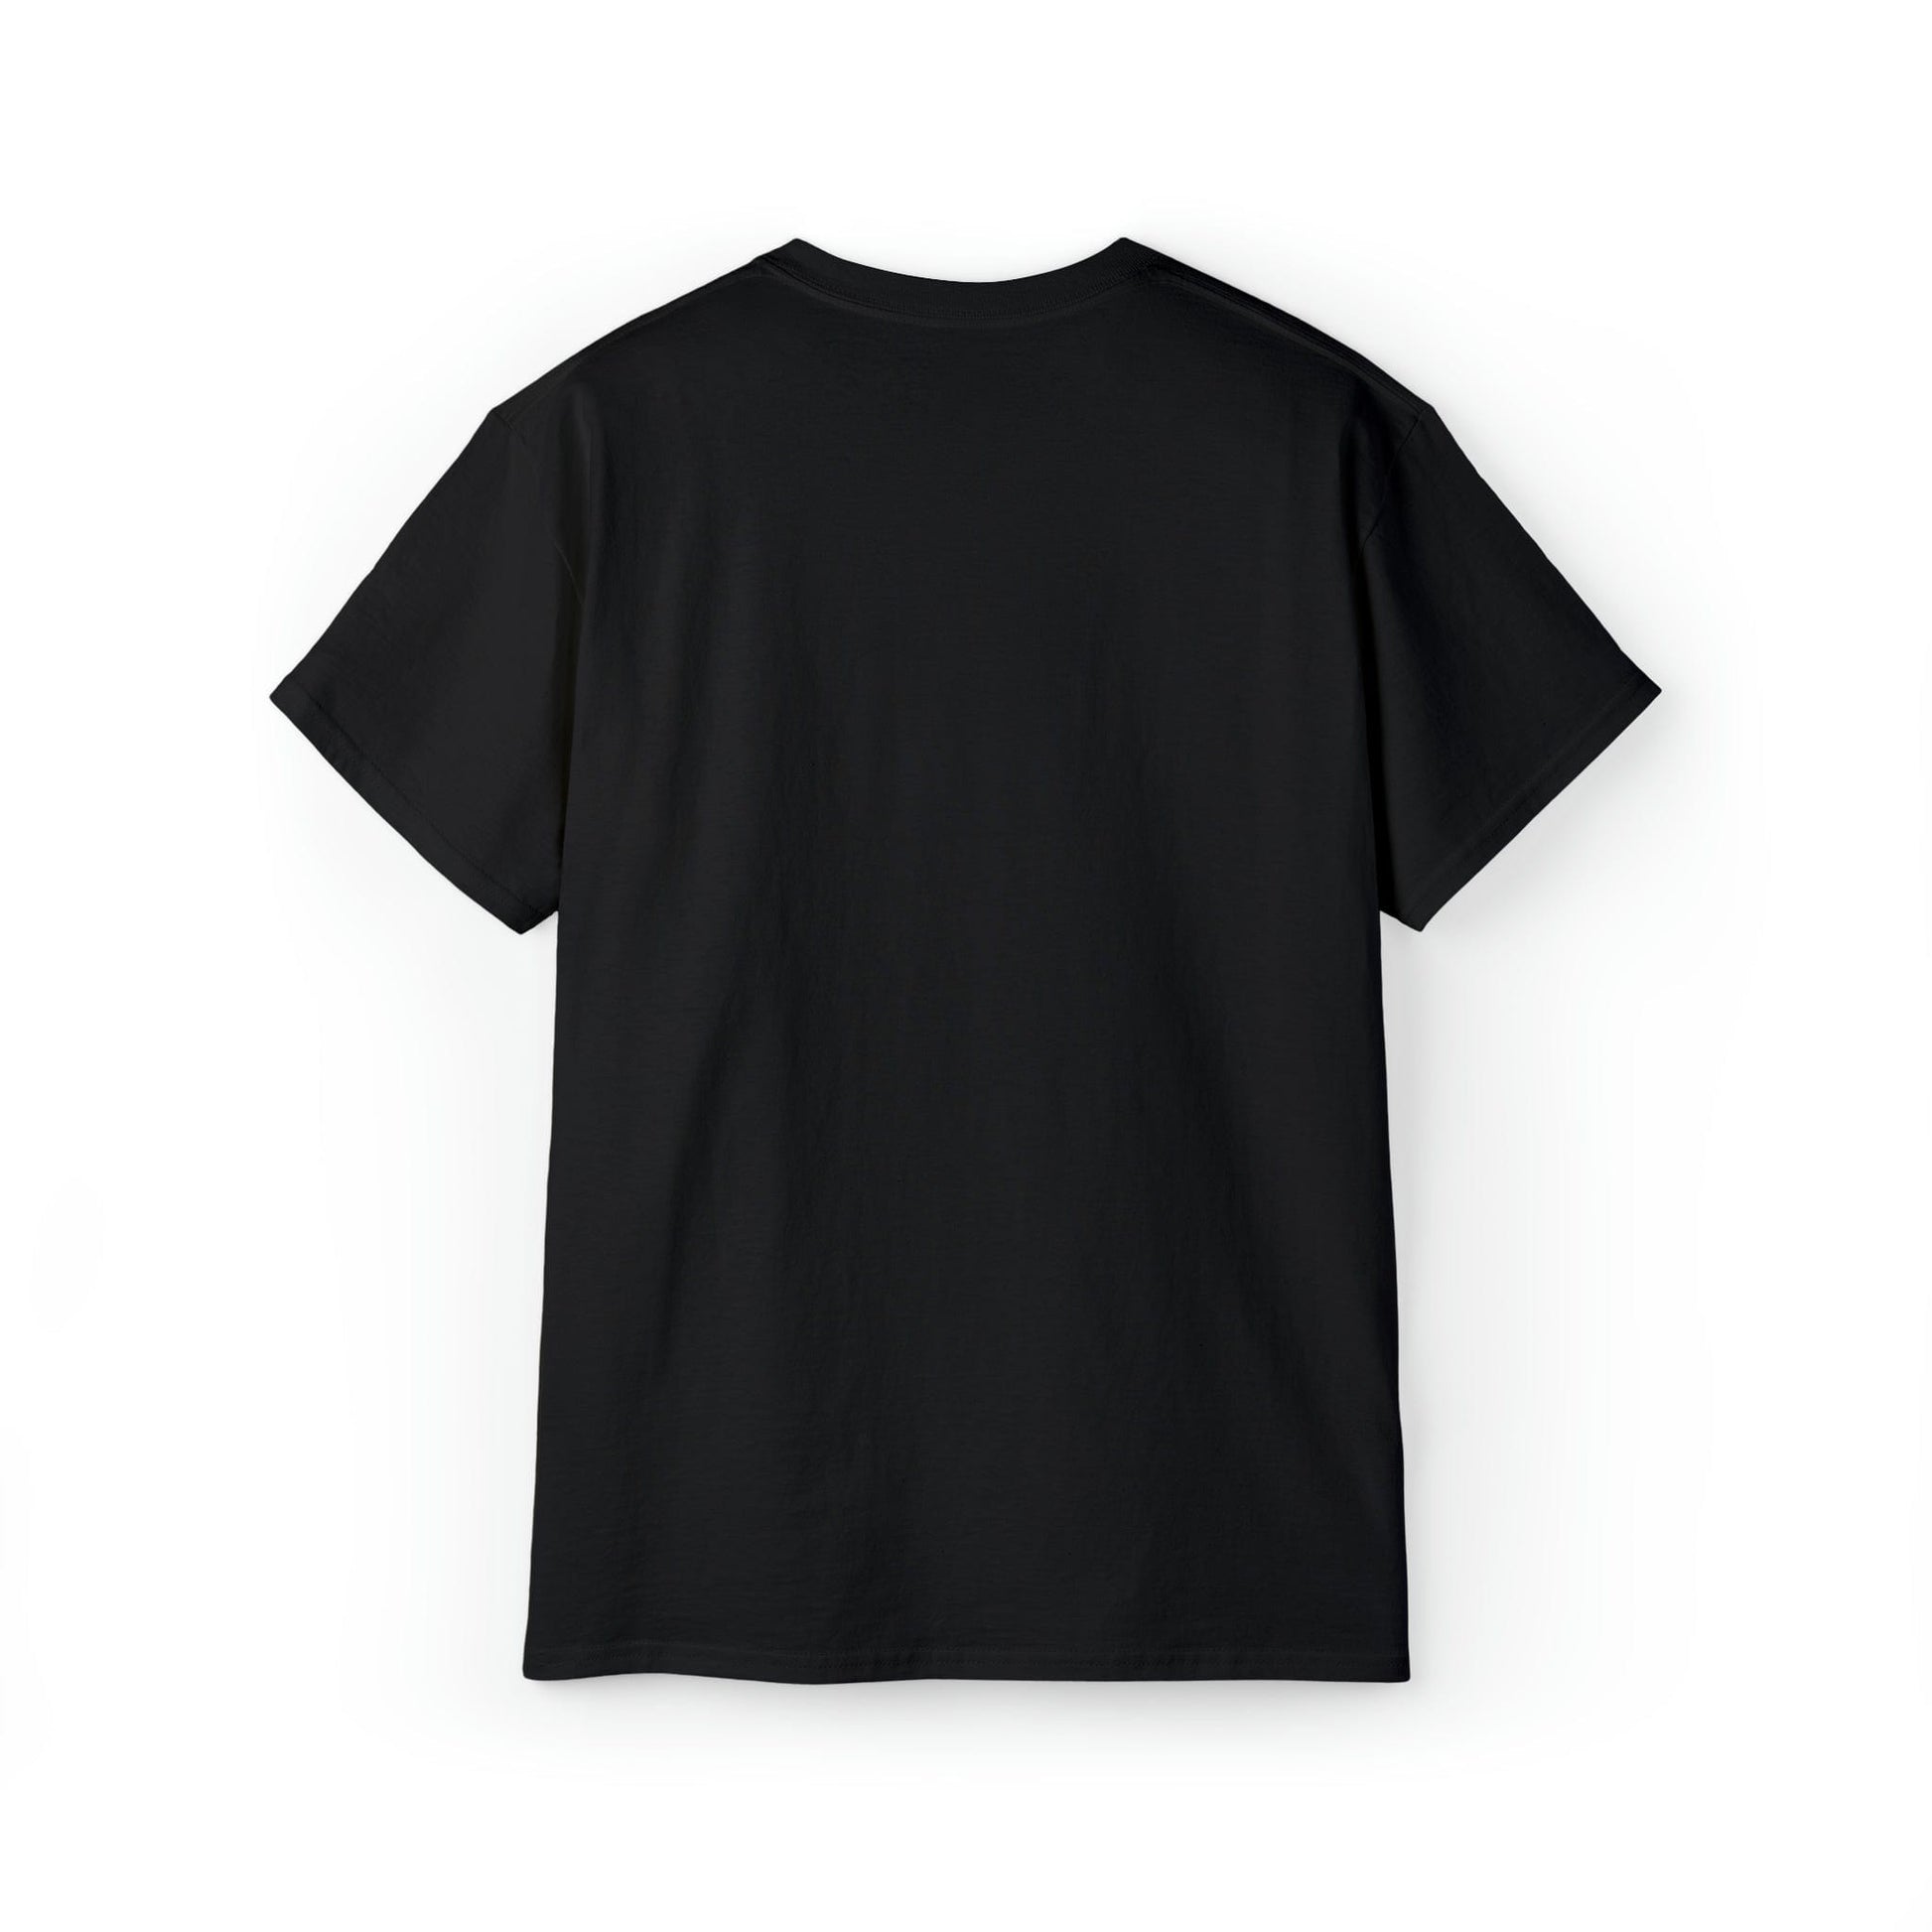 T-Shirt Locktober Graphic Tee - Lockedboy Athletics Chastity T-Shirts LEATHERDADDY BATOR